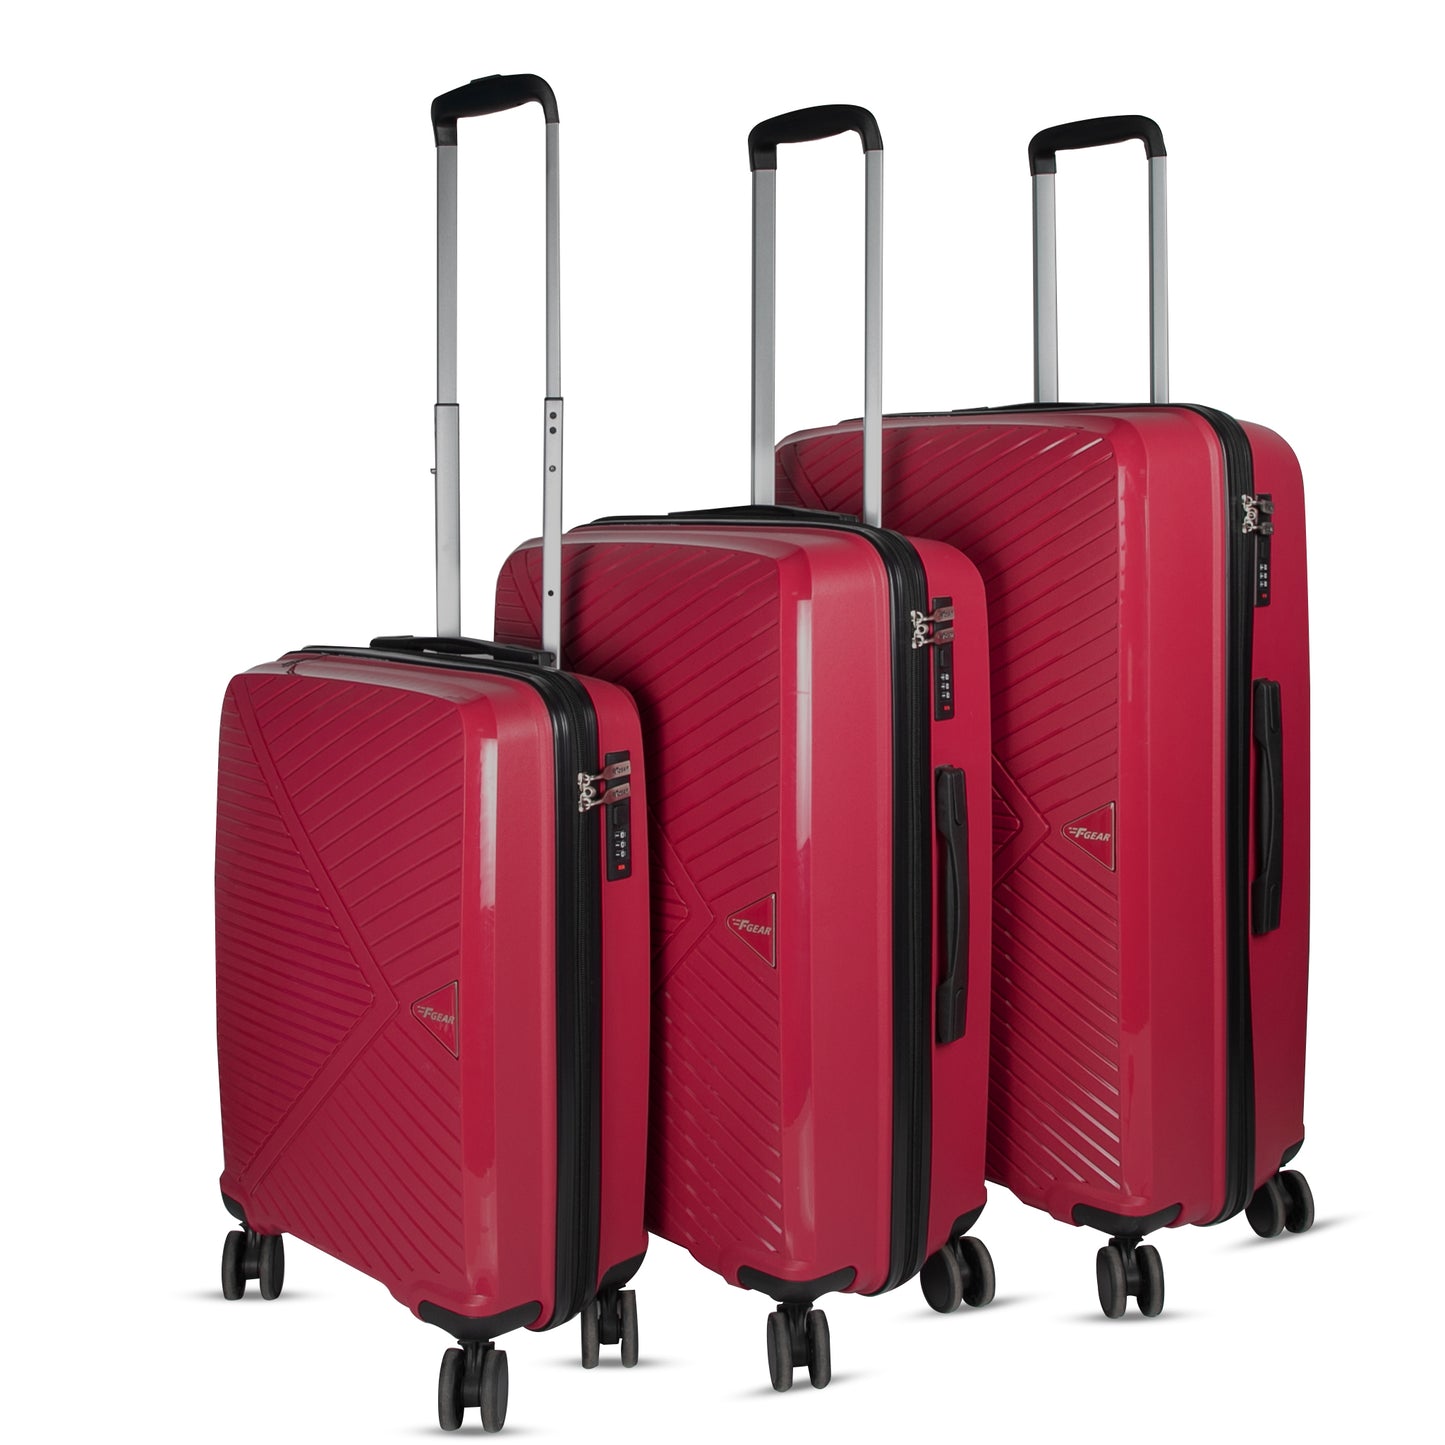 Eagle PP03 Rosebud Suitcase Set of 3